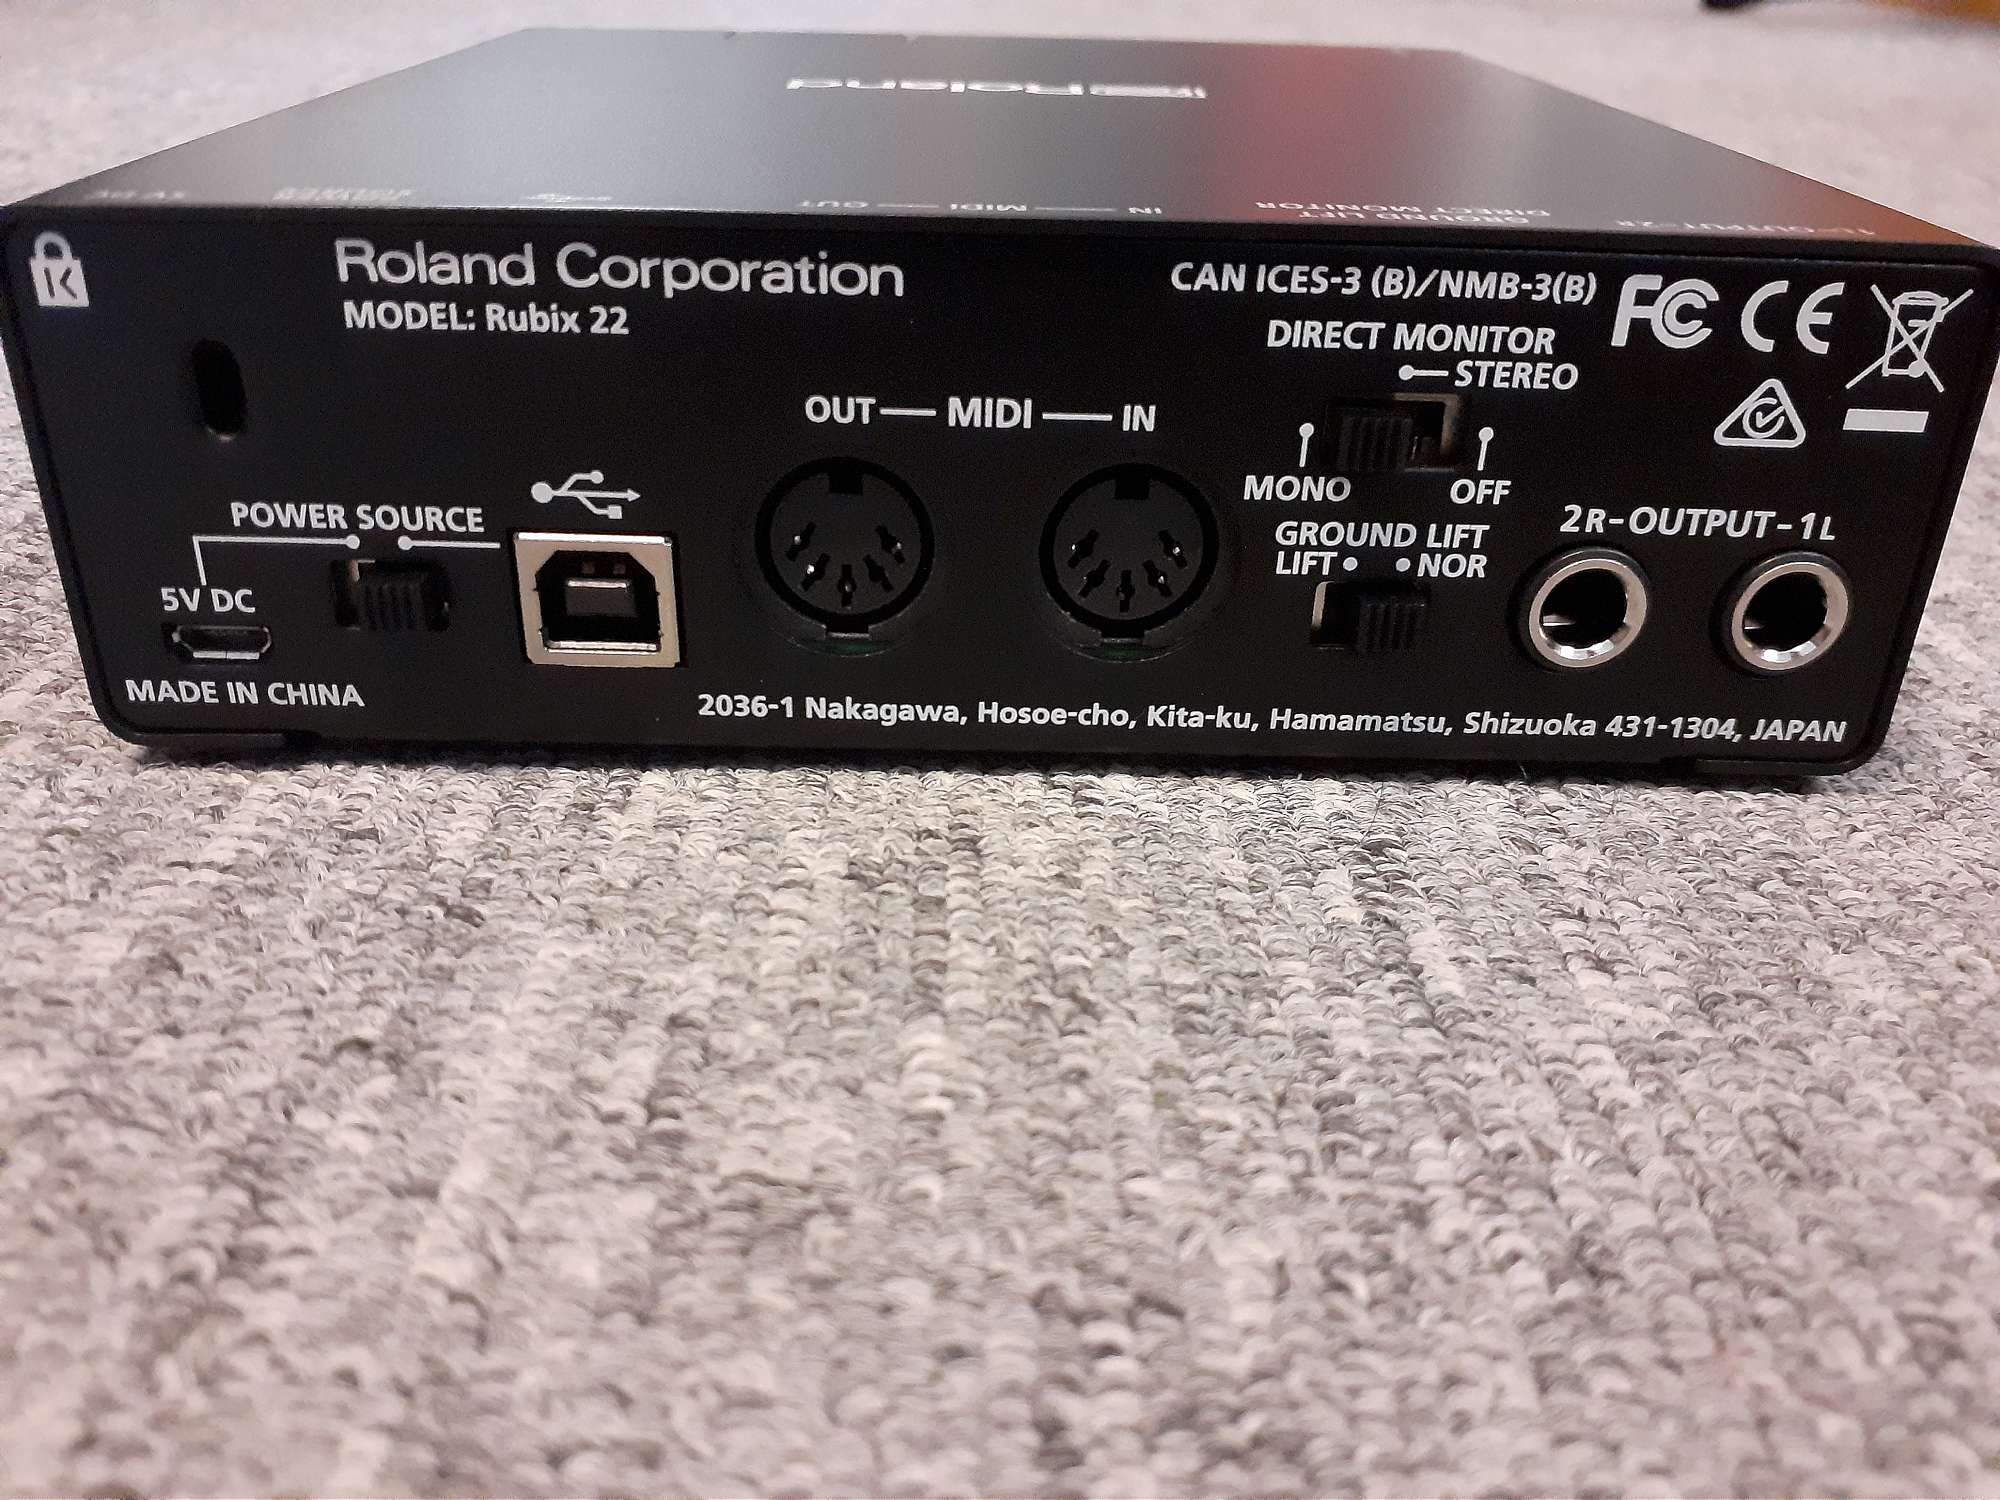 Roland Rubix22, Interface USB Audio